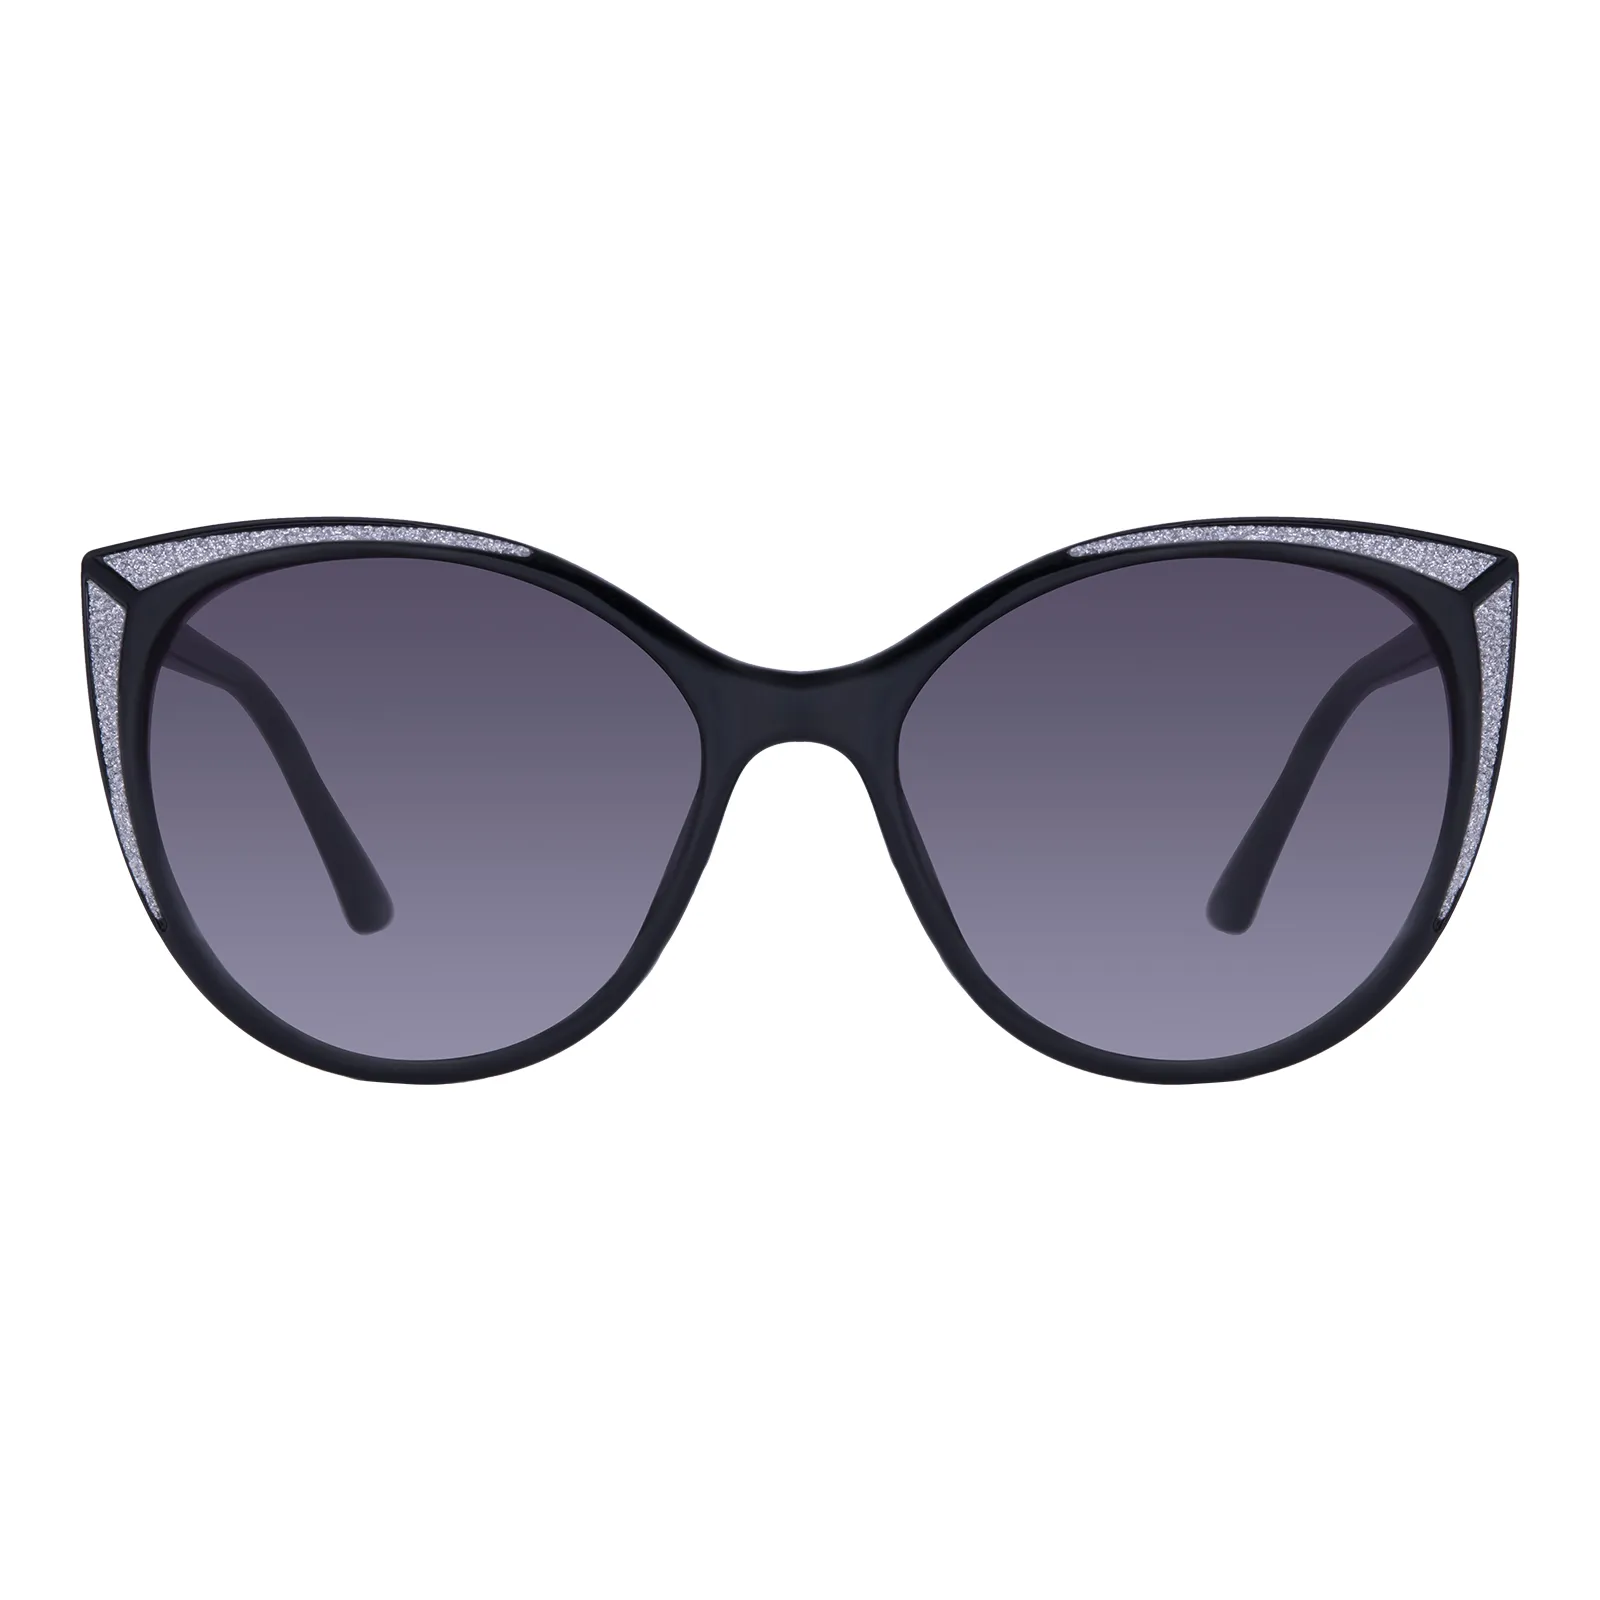 Trudie - Cat-Eye Black Sunglasses for Women